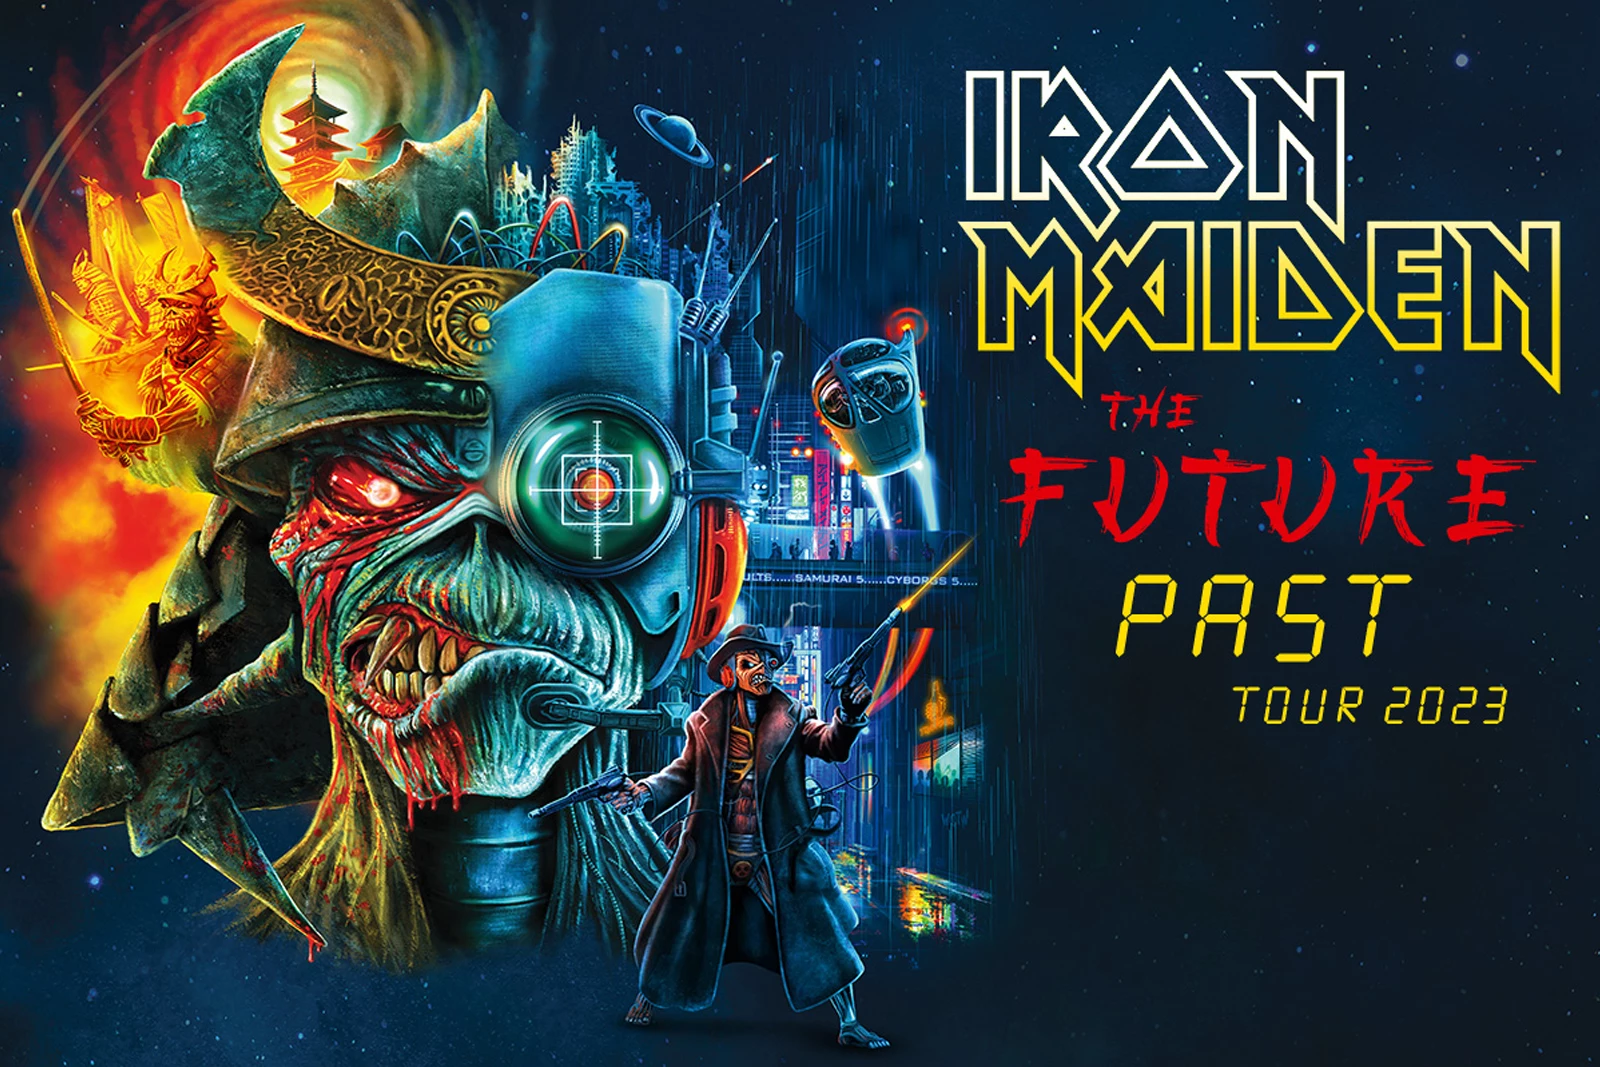 Iron Maiden Announces First 2023 'The Future Past' Tour Dates